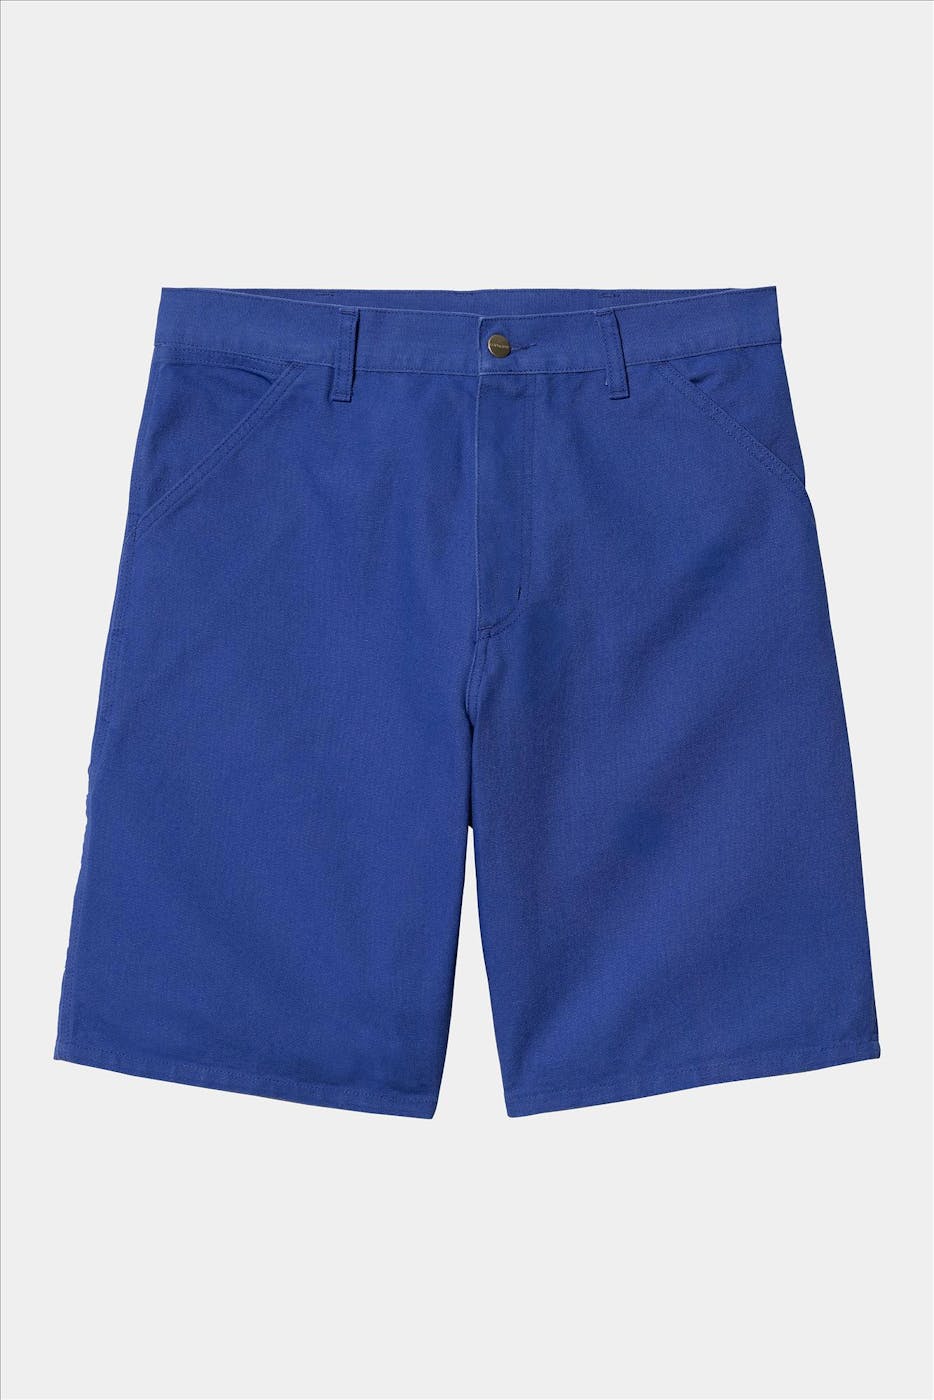 Carhartt WIP - Blauwe Single Knee short